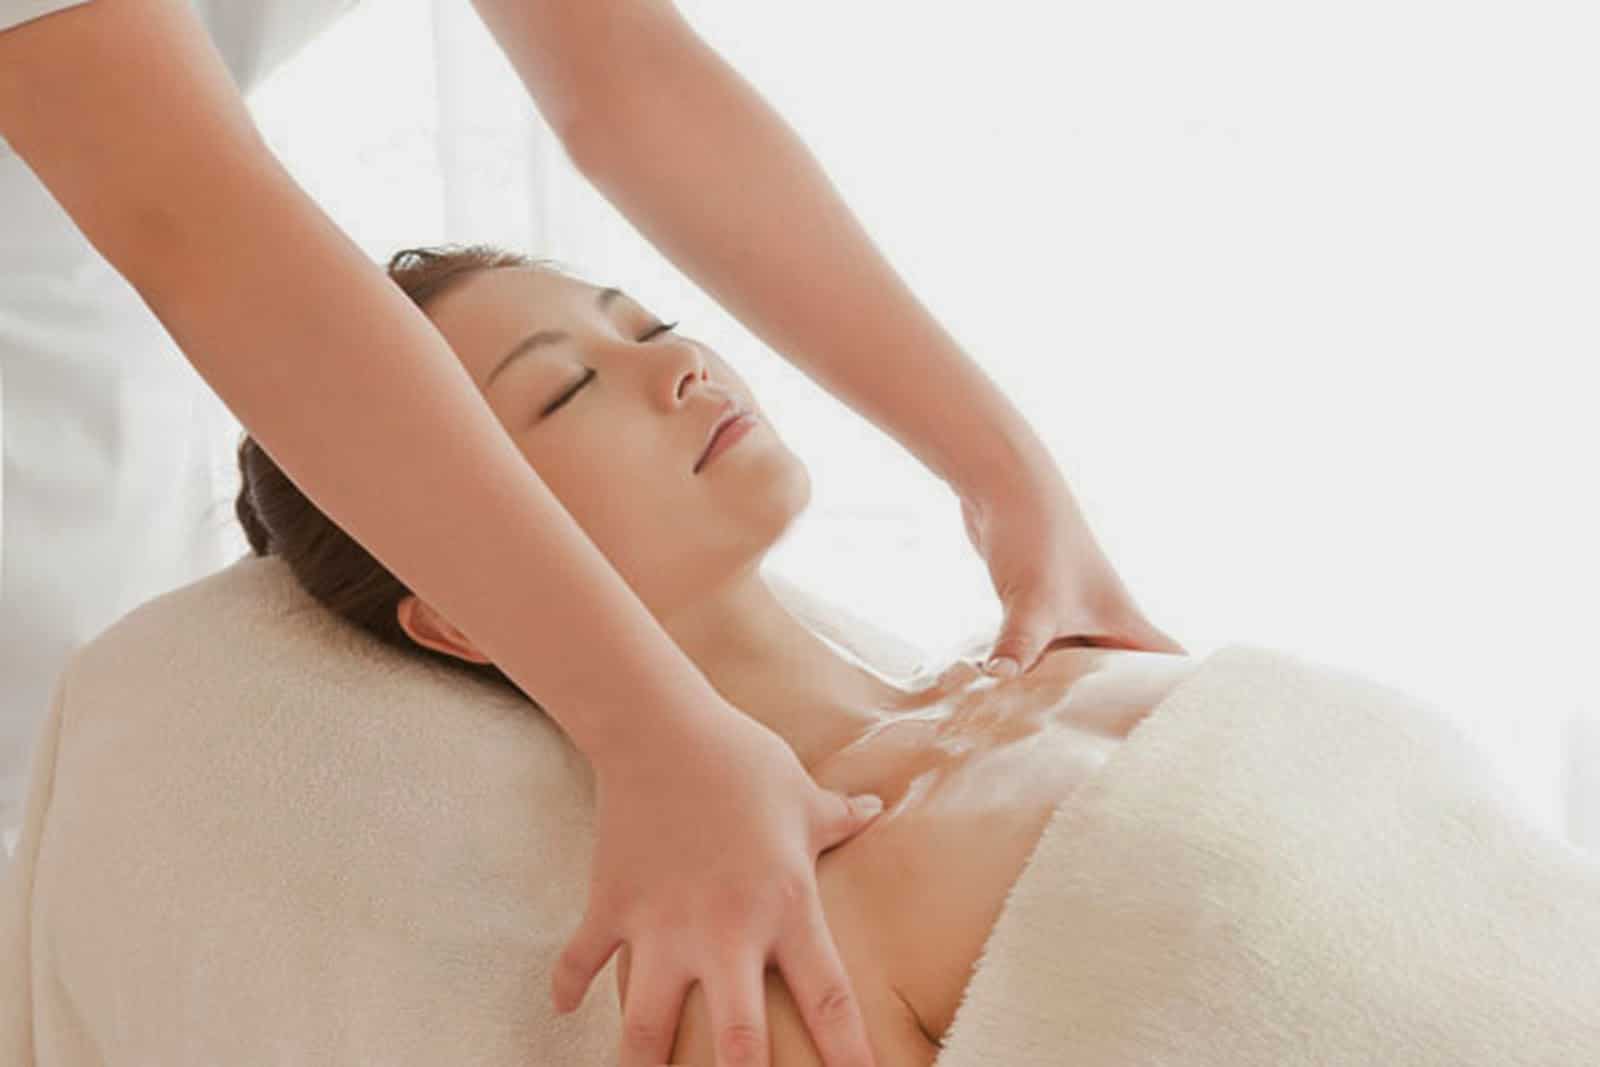 Aphrodisiac japan massage pictures